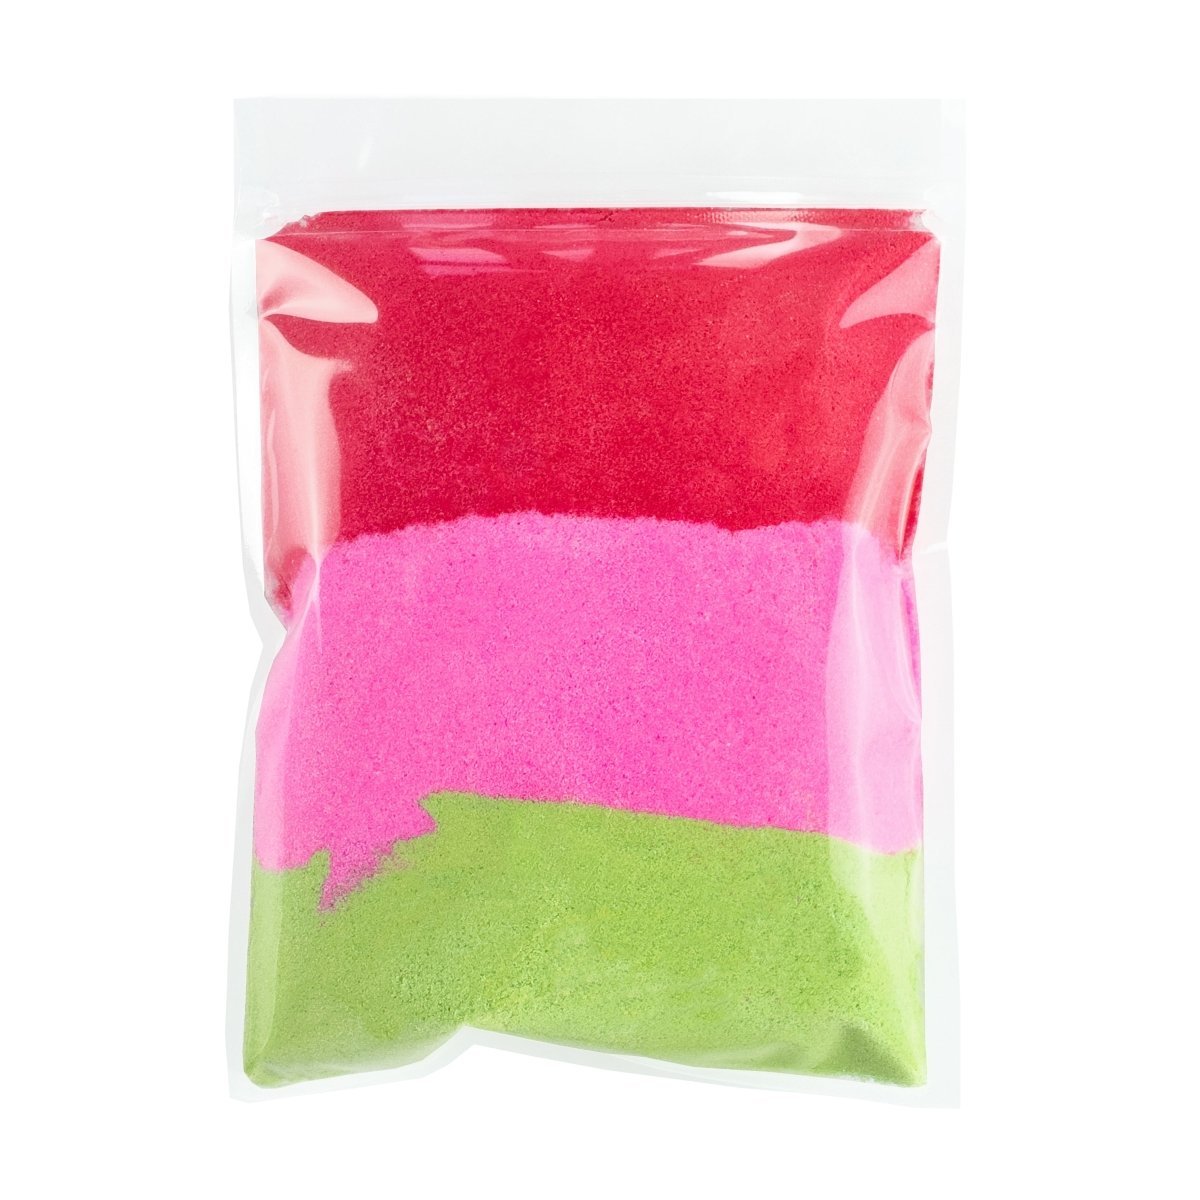 Sugar Baby Bath Dust for Kids & Adults - Colourful Glitters & Watermelon Fragrance - Made in Australia by Bath Box